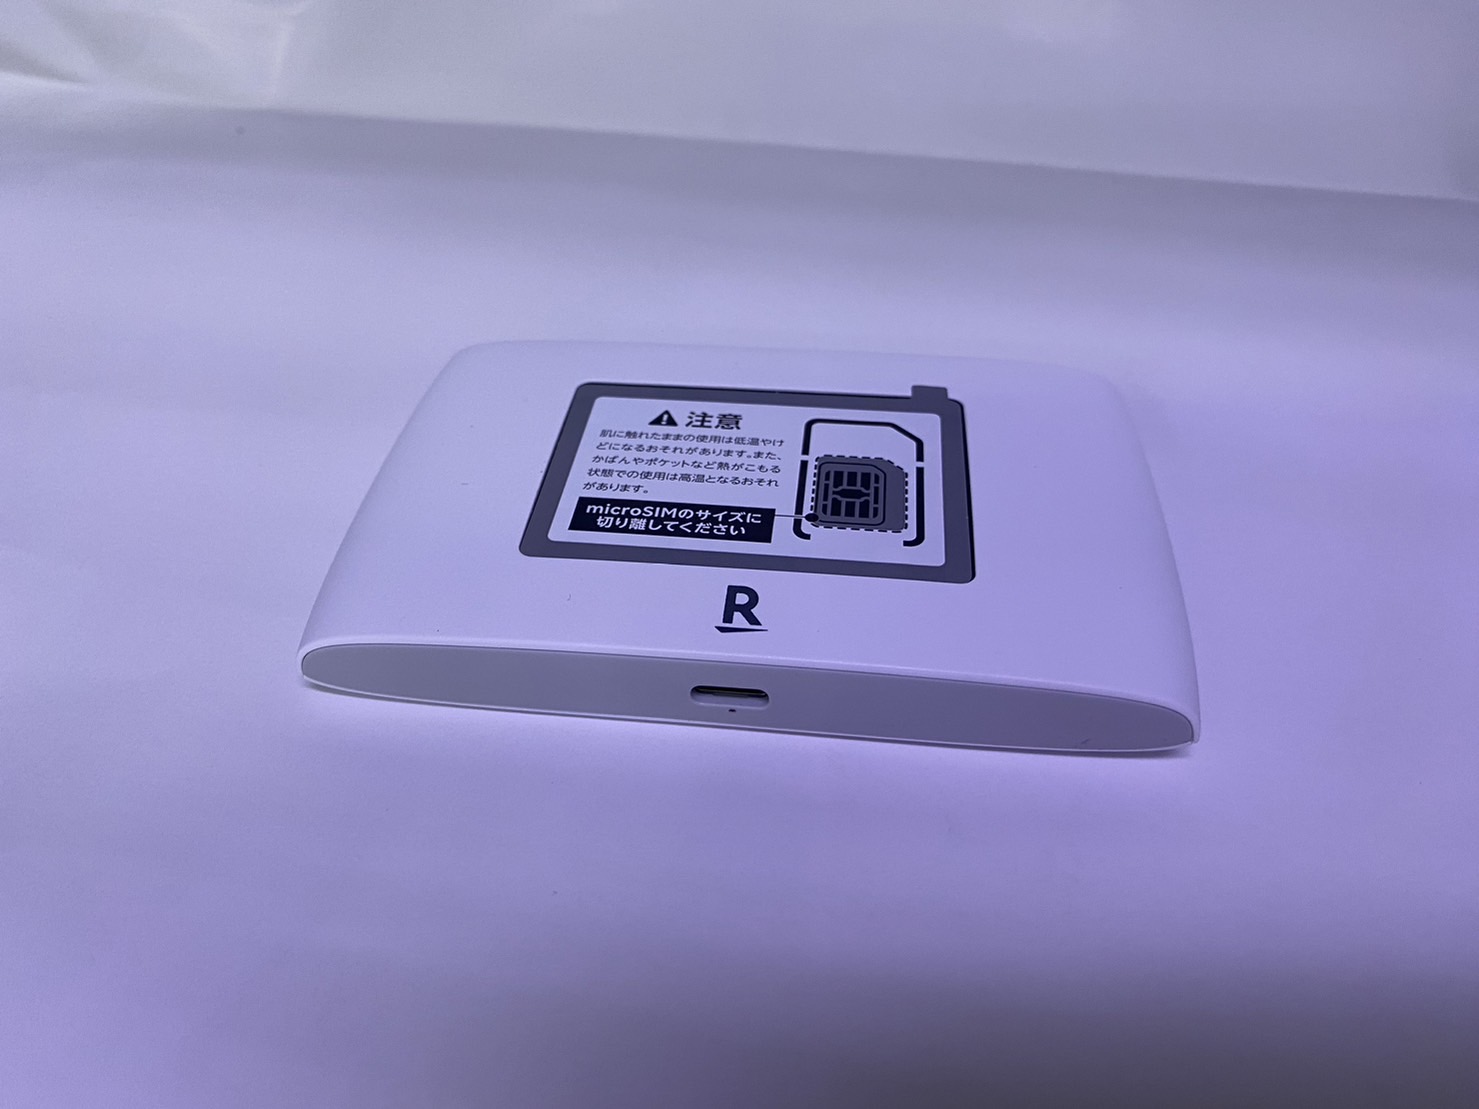 Rakuten WiFi Pocket 2C [ホワイト]の激安通販(詳細情報) - パソコン